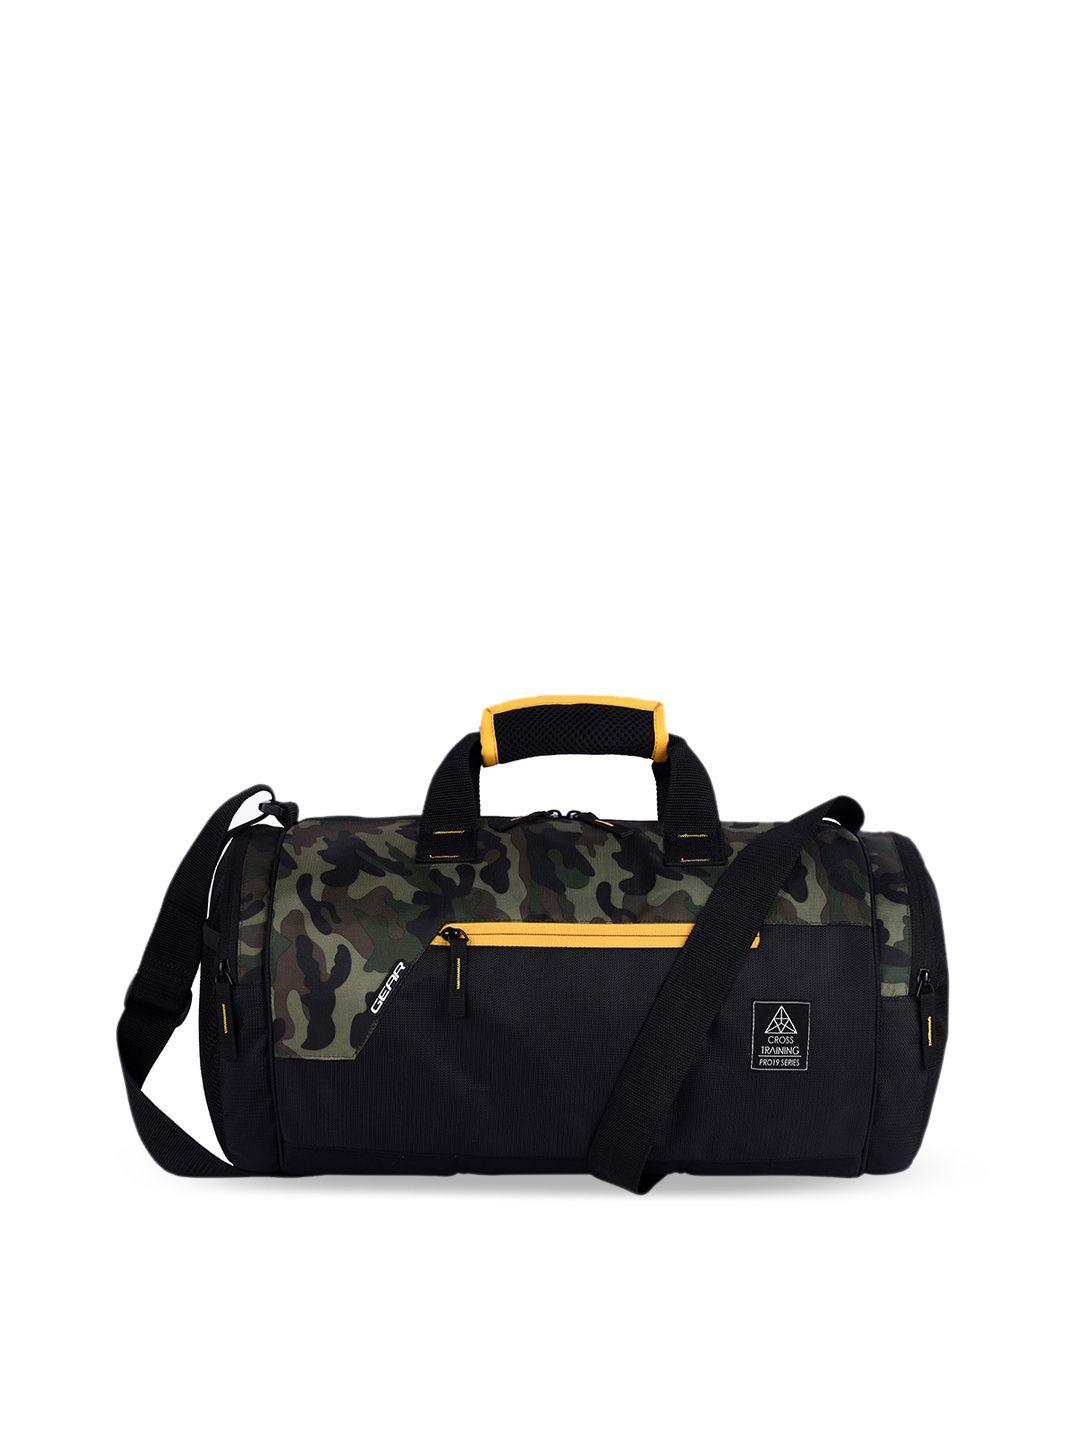 gear-khaki-colour-&-black-camouflage-print-duffel-bag